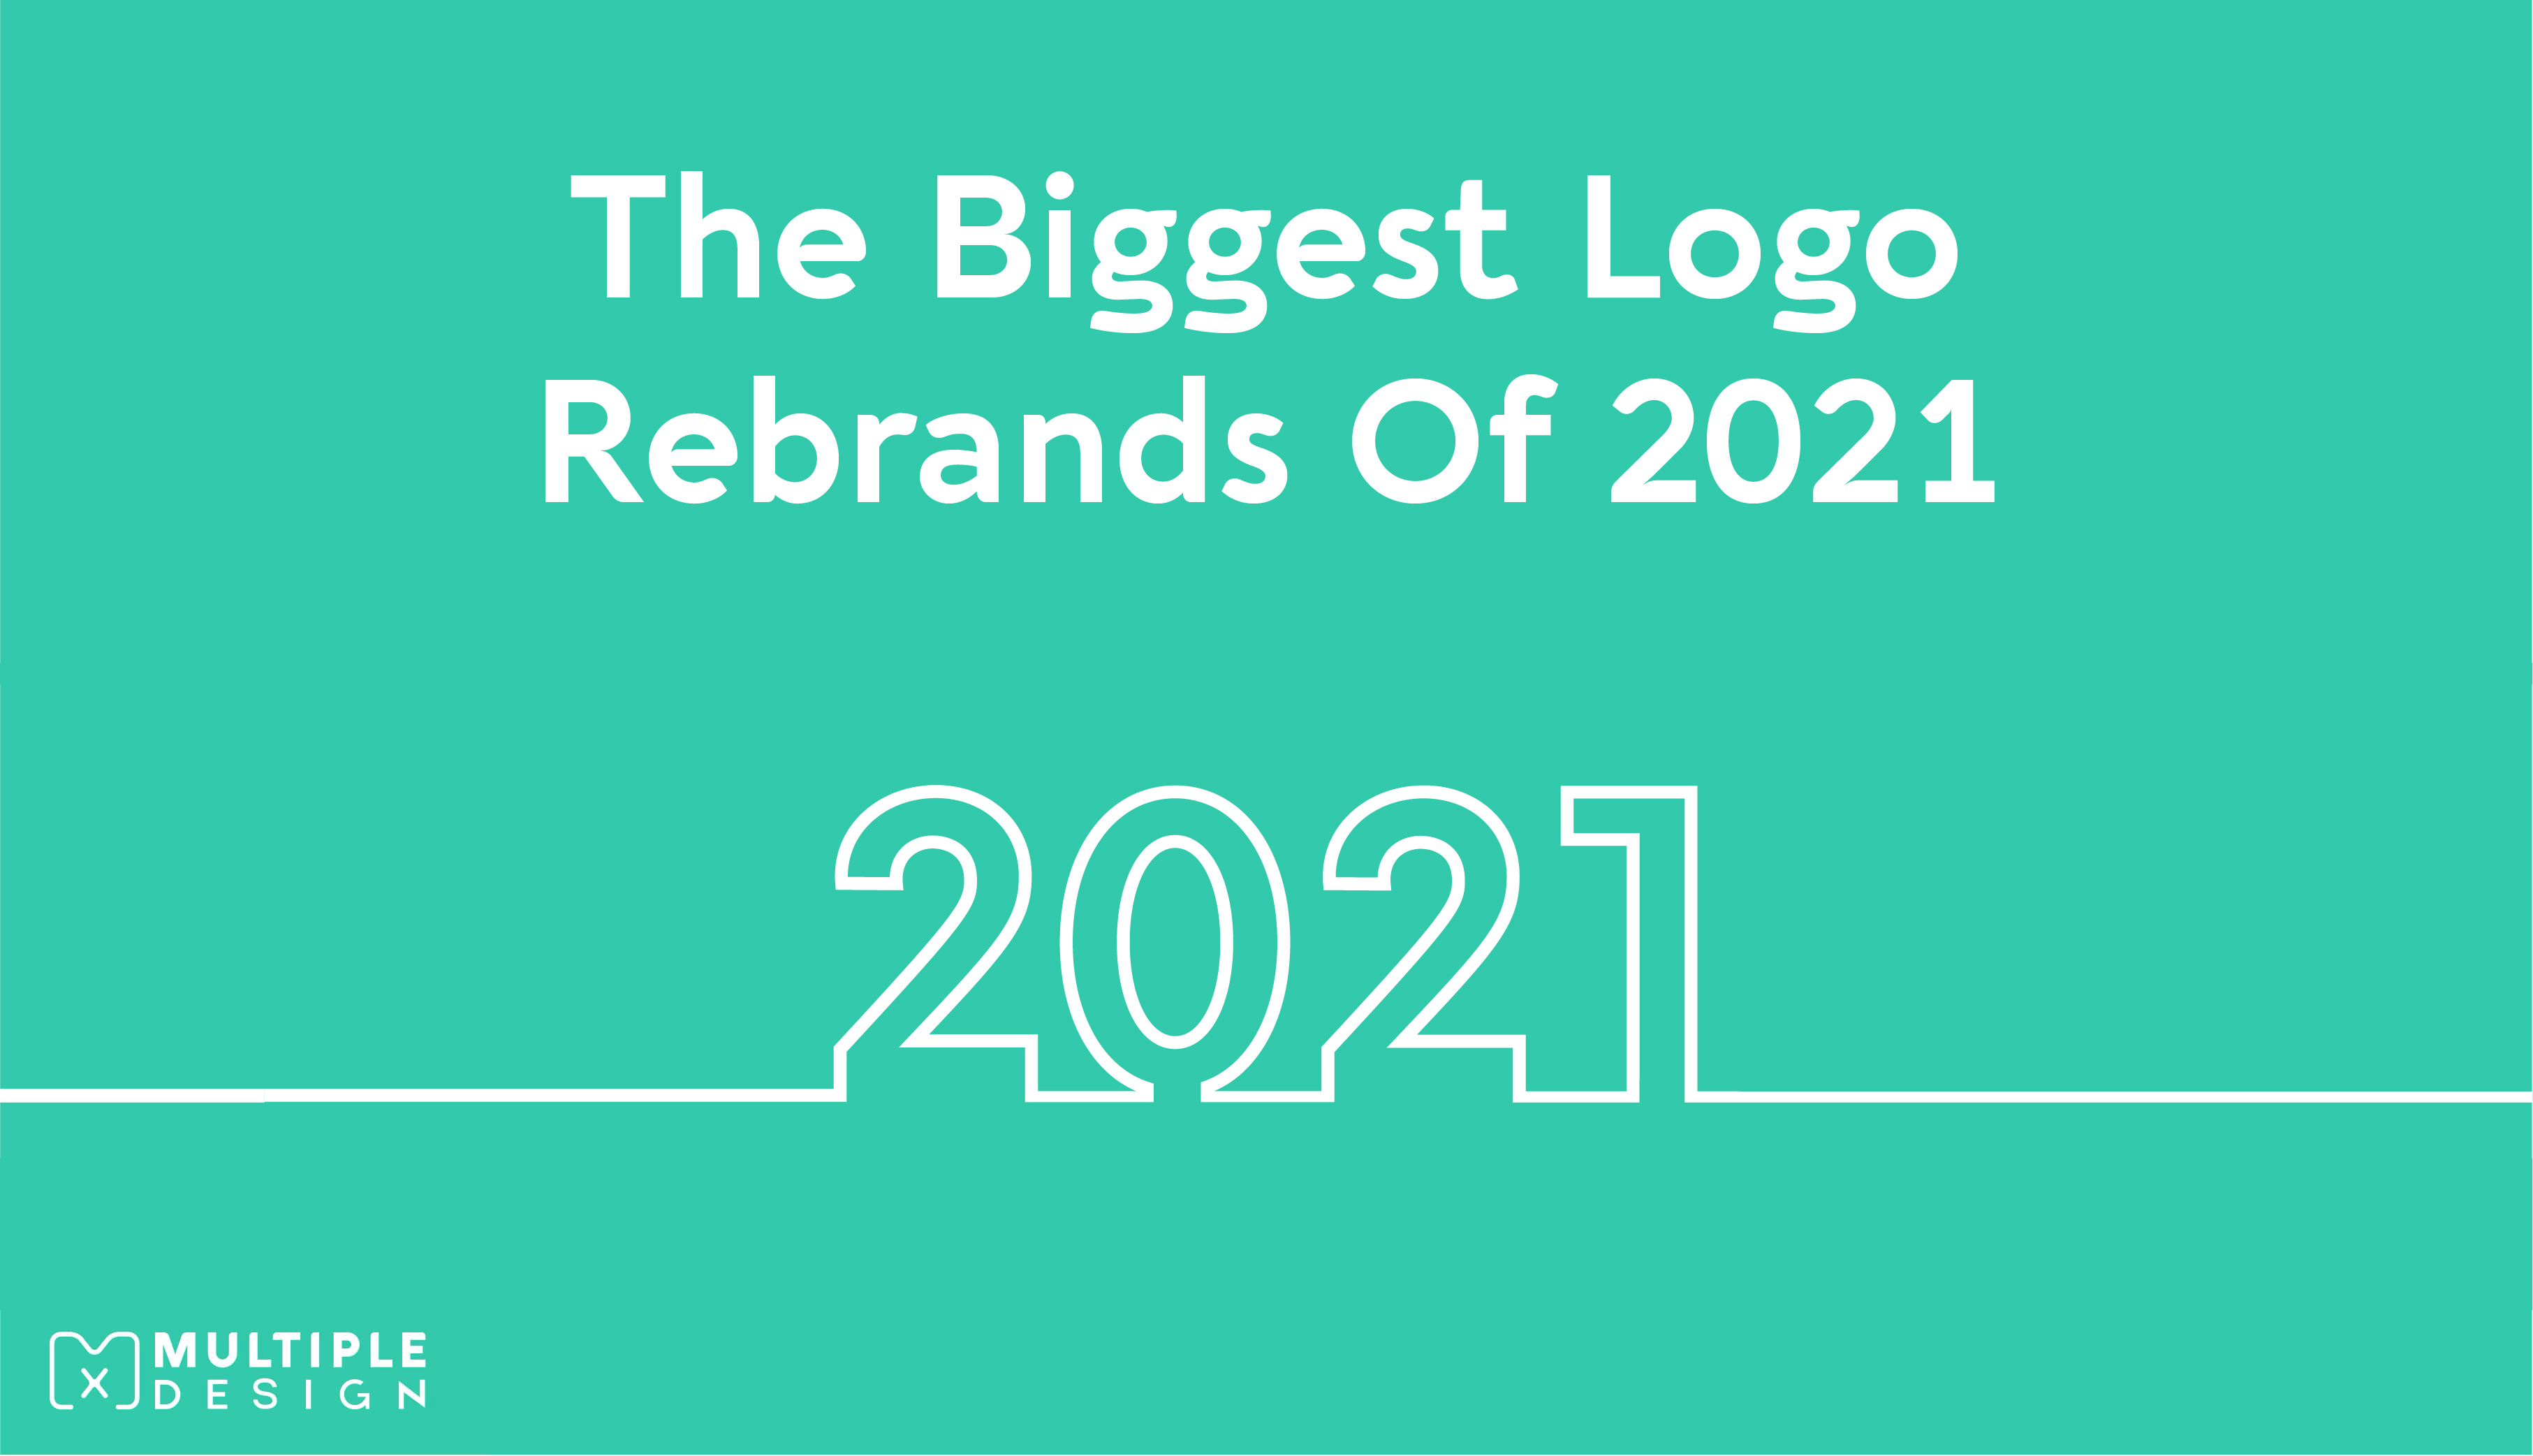 The Biggest Logo Rebrands Of 2021